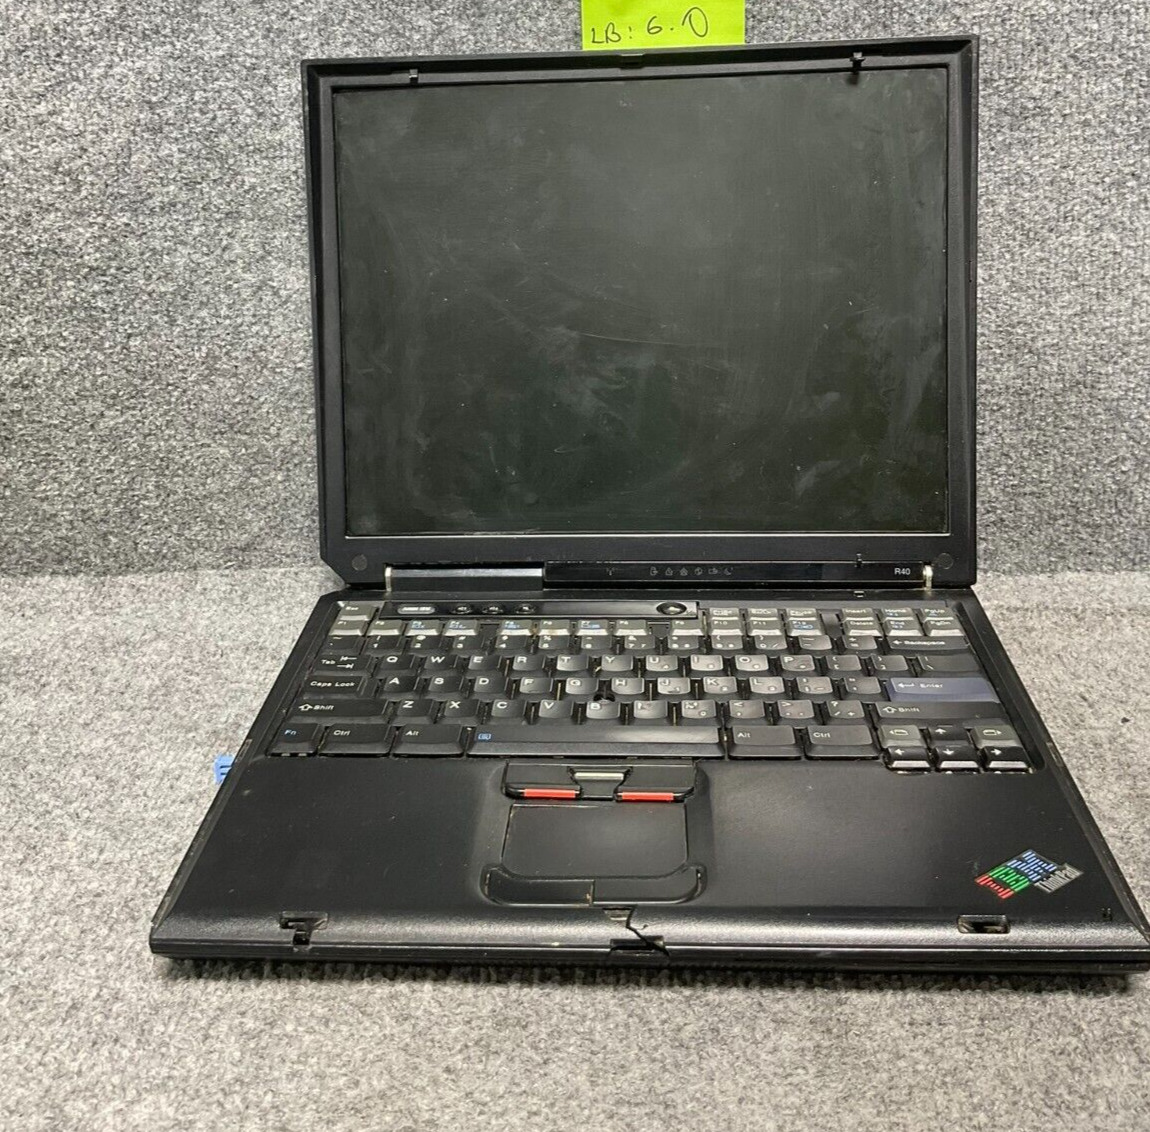 IBM ThinkPad Laptop R40 Type 2682, Windows XP Professional 1-2 CPU - For Parts